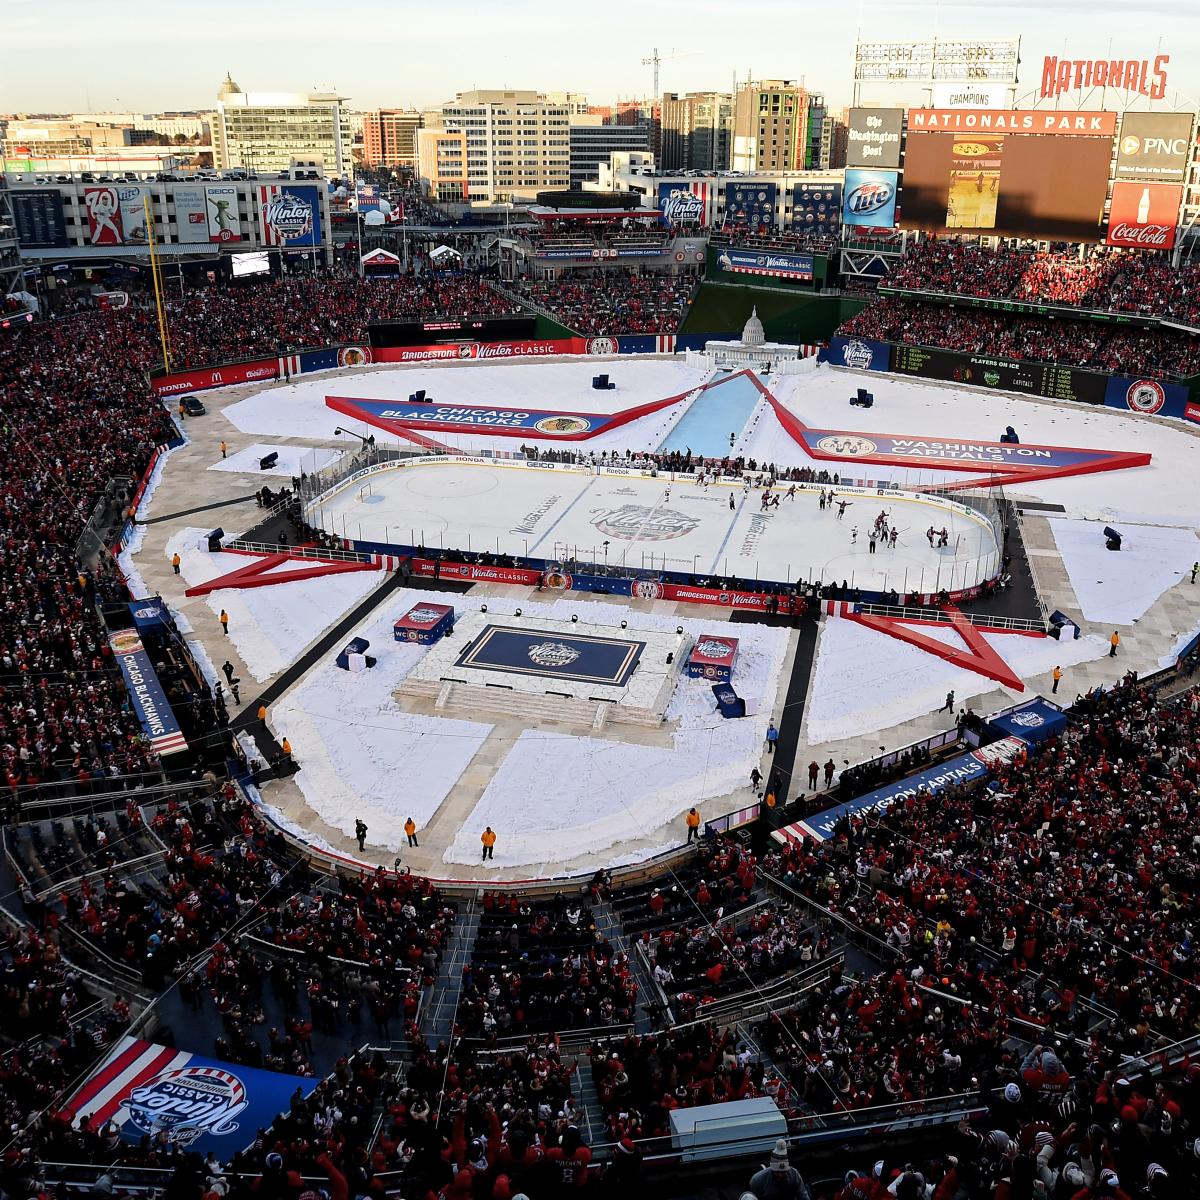 2015 NHL Stadium Series - Wikipedia